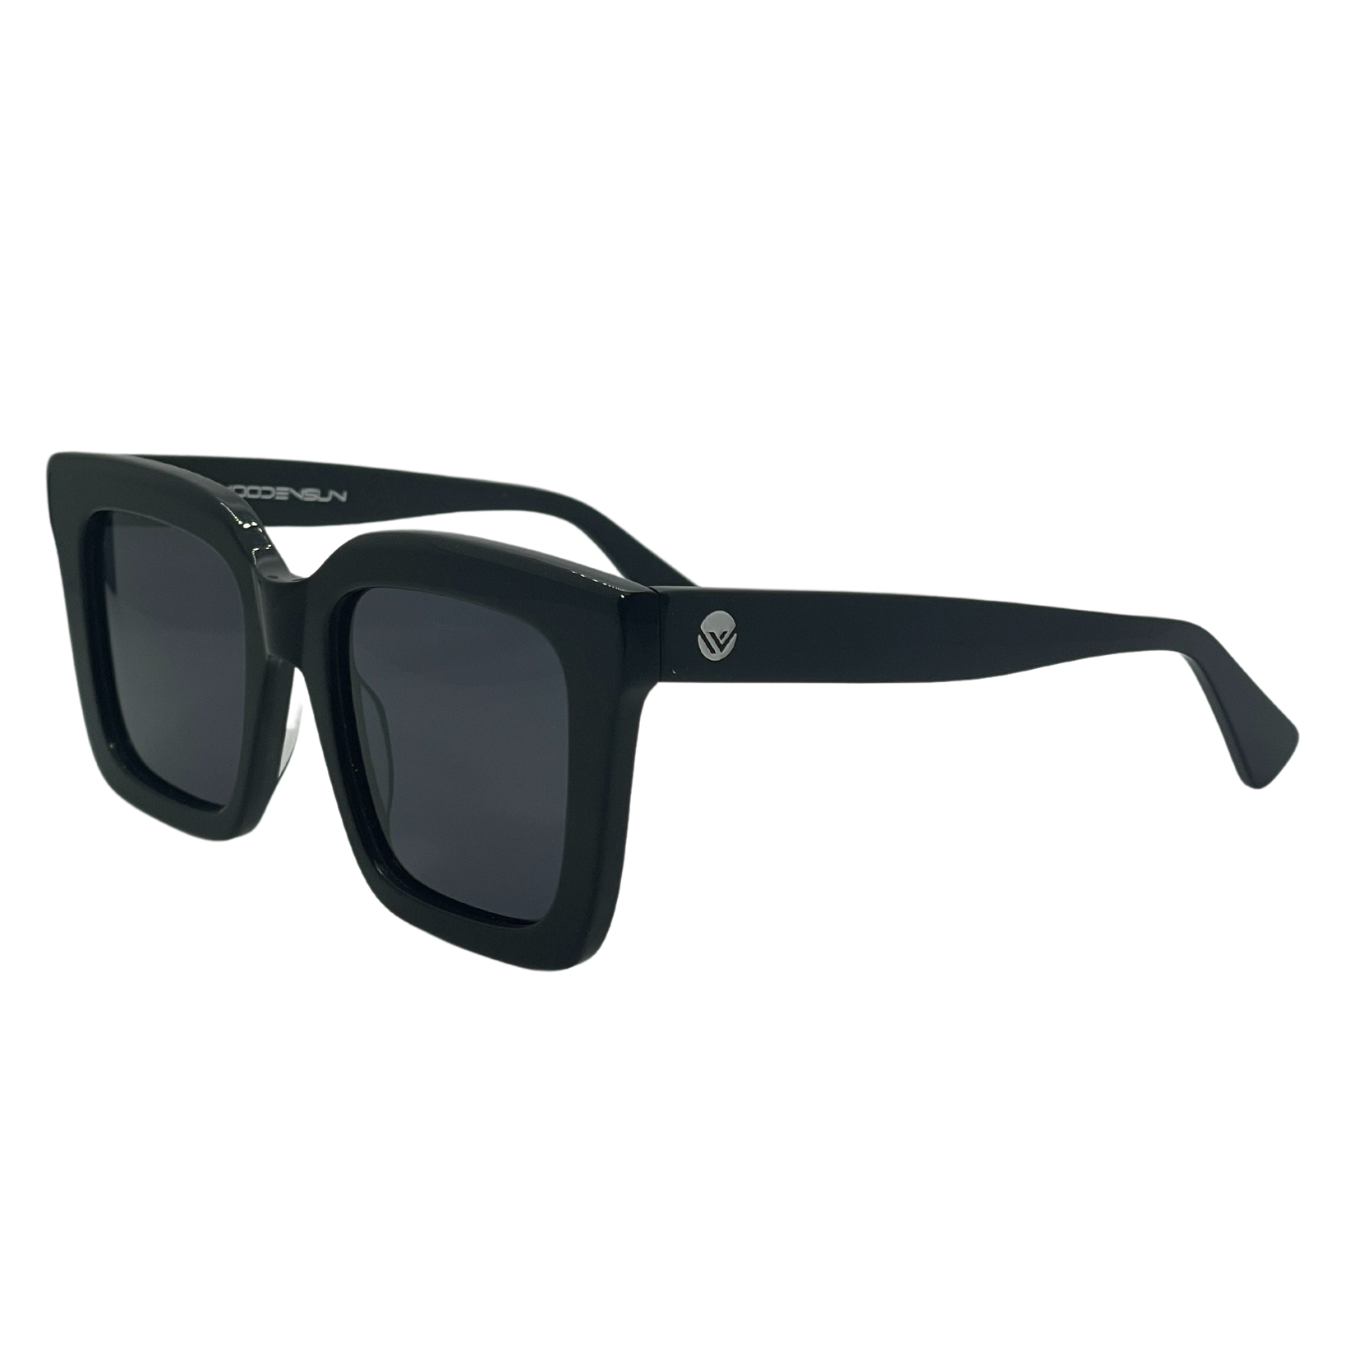 Santa Monica - D-Frame Sunglasses - Woodensun Sunglasses | Eco-fashion eyewear